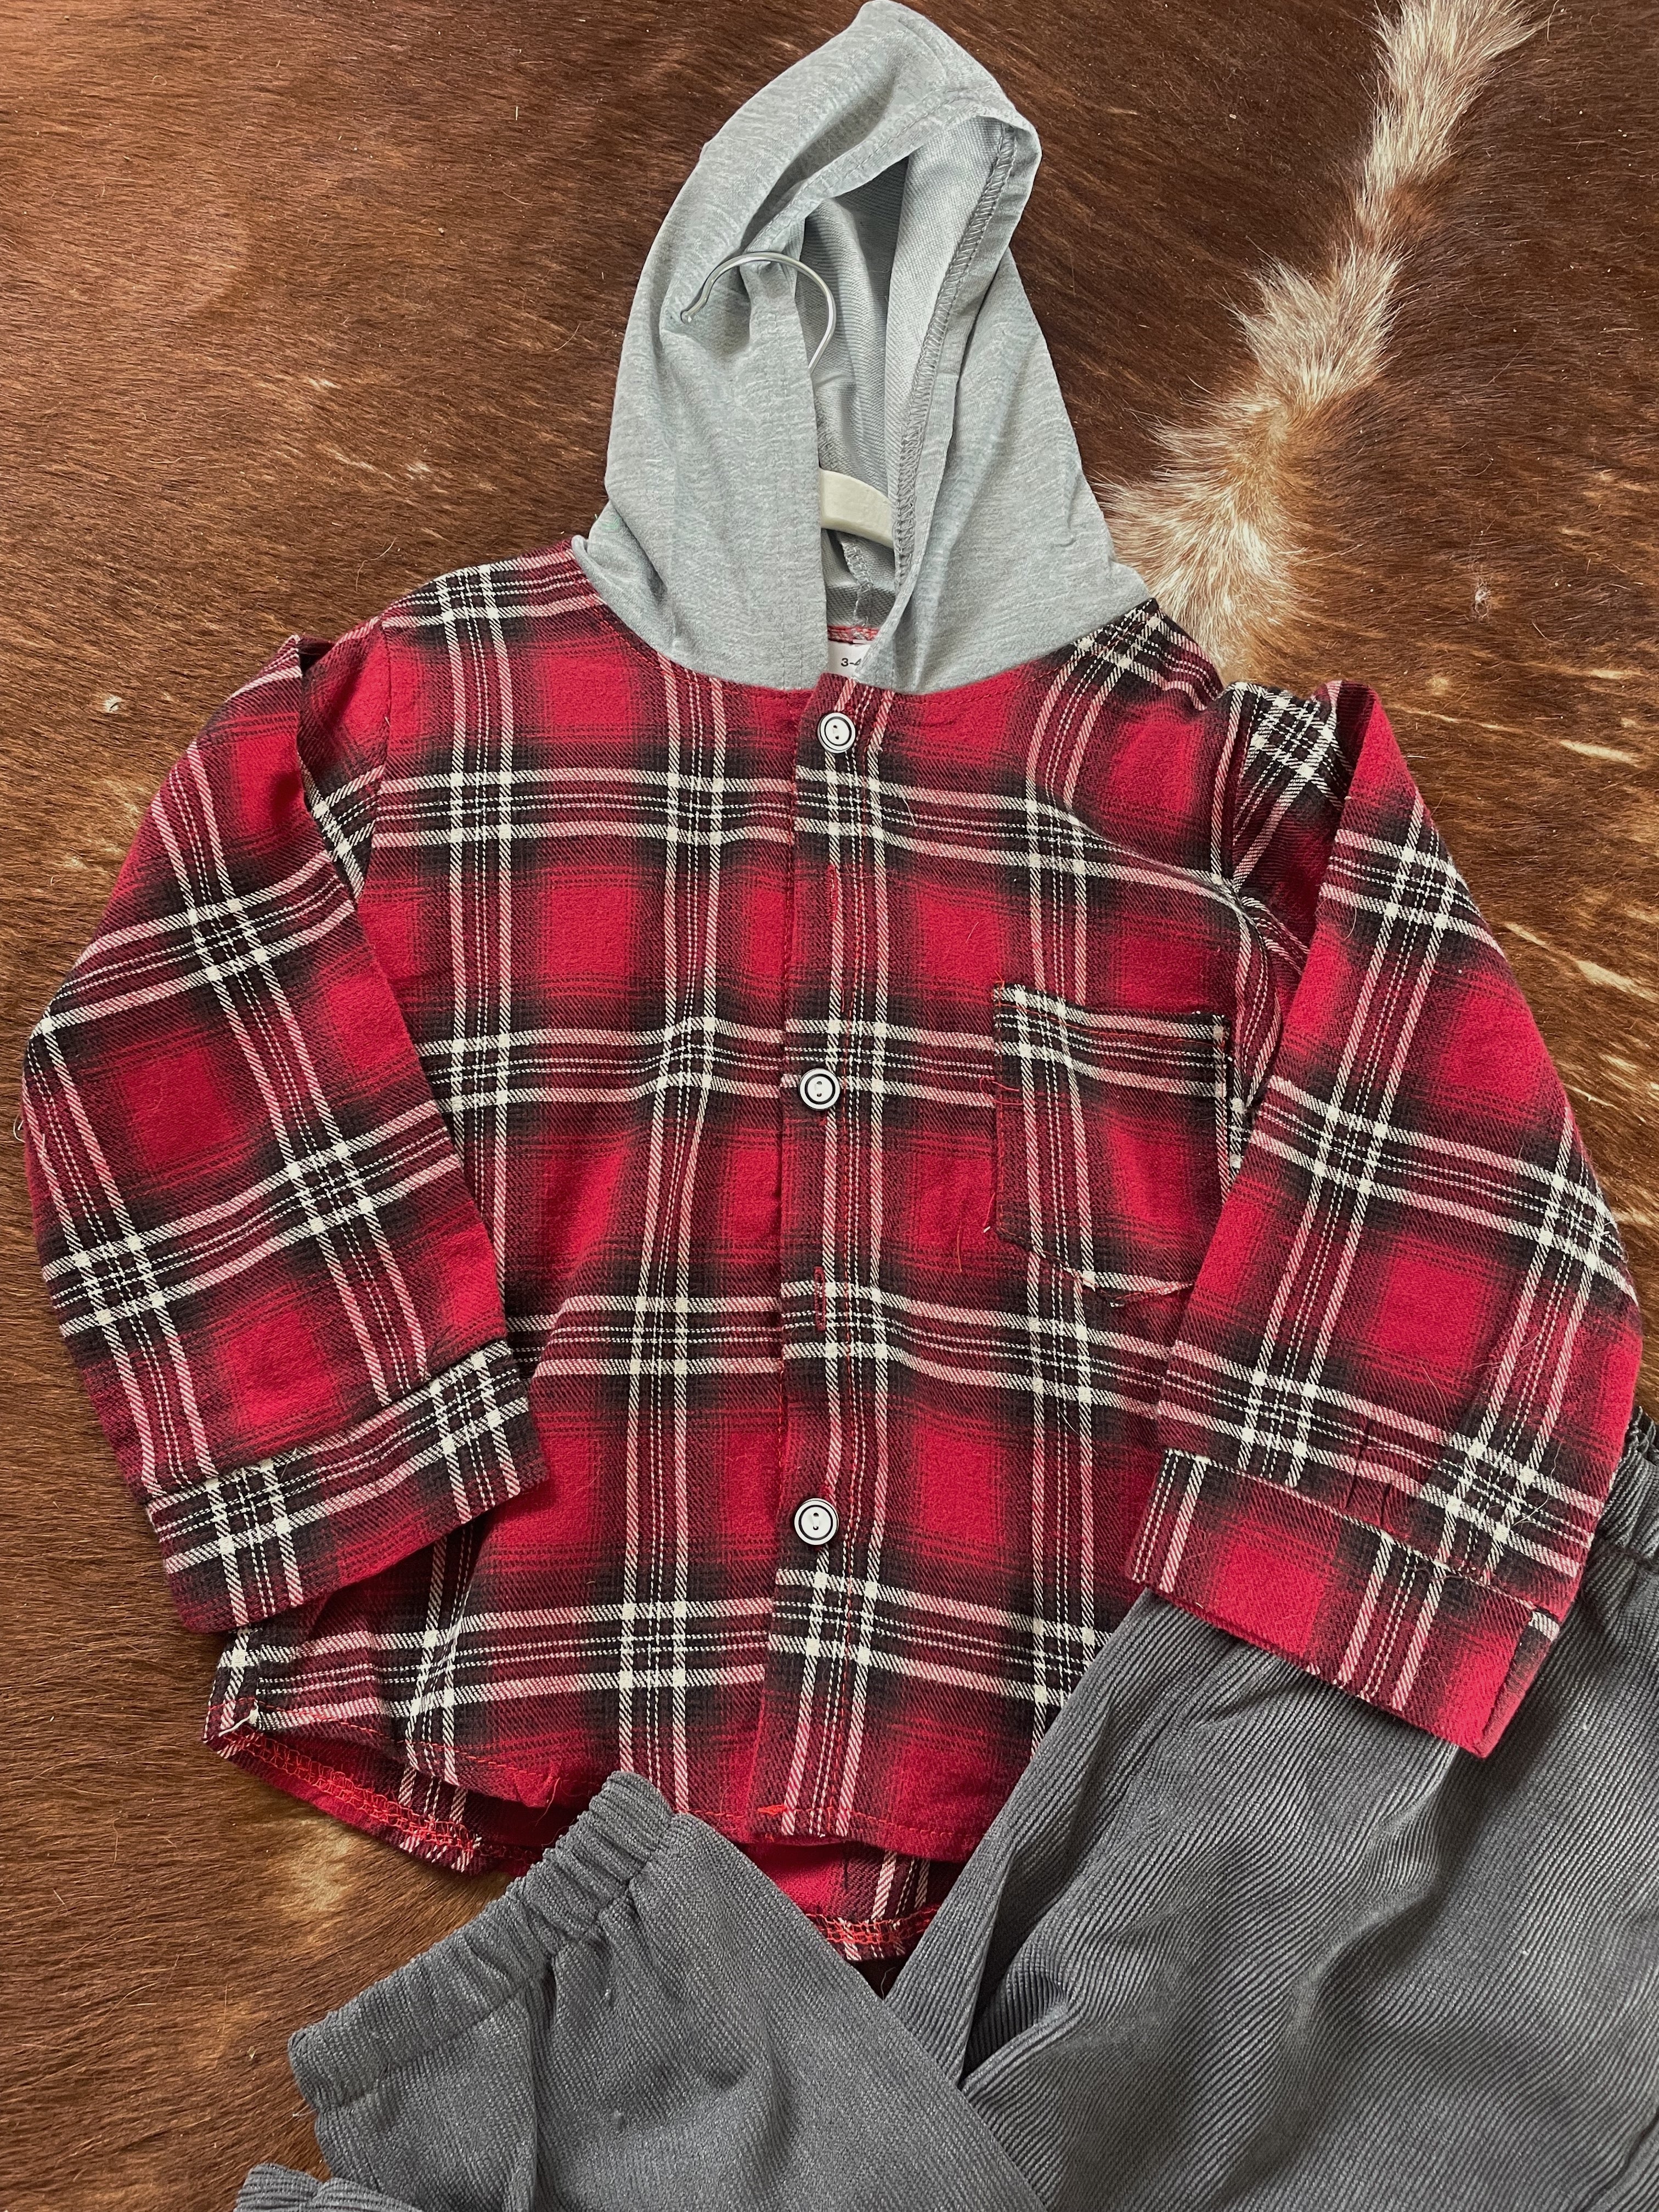 2 piece toddler red flannel set